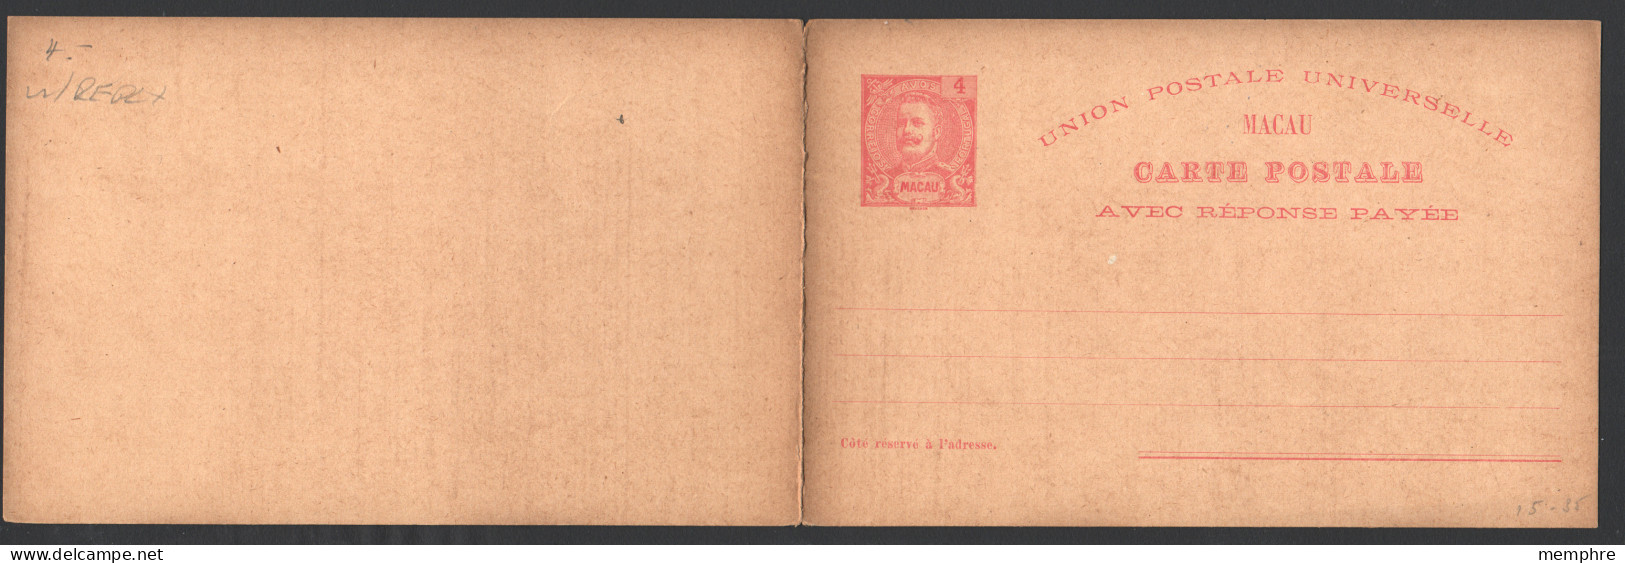 1903  Carte Postale Avec Réponse Payée Carlos 4 Avos  Neuve - Storia Postale